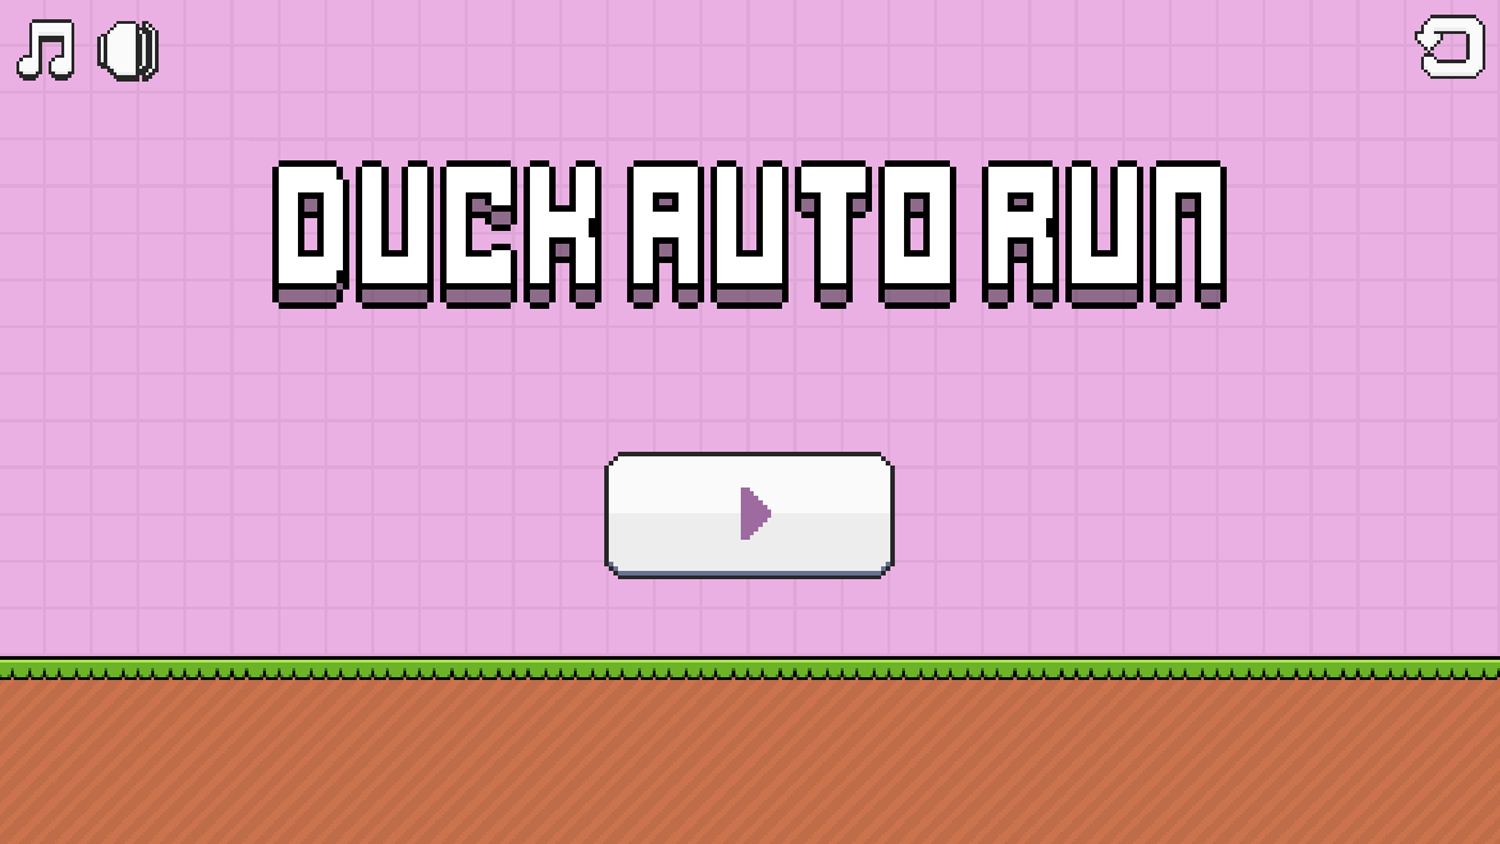 Duck Auto Run Game Welcome Screen Screenshot.